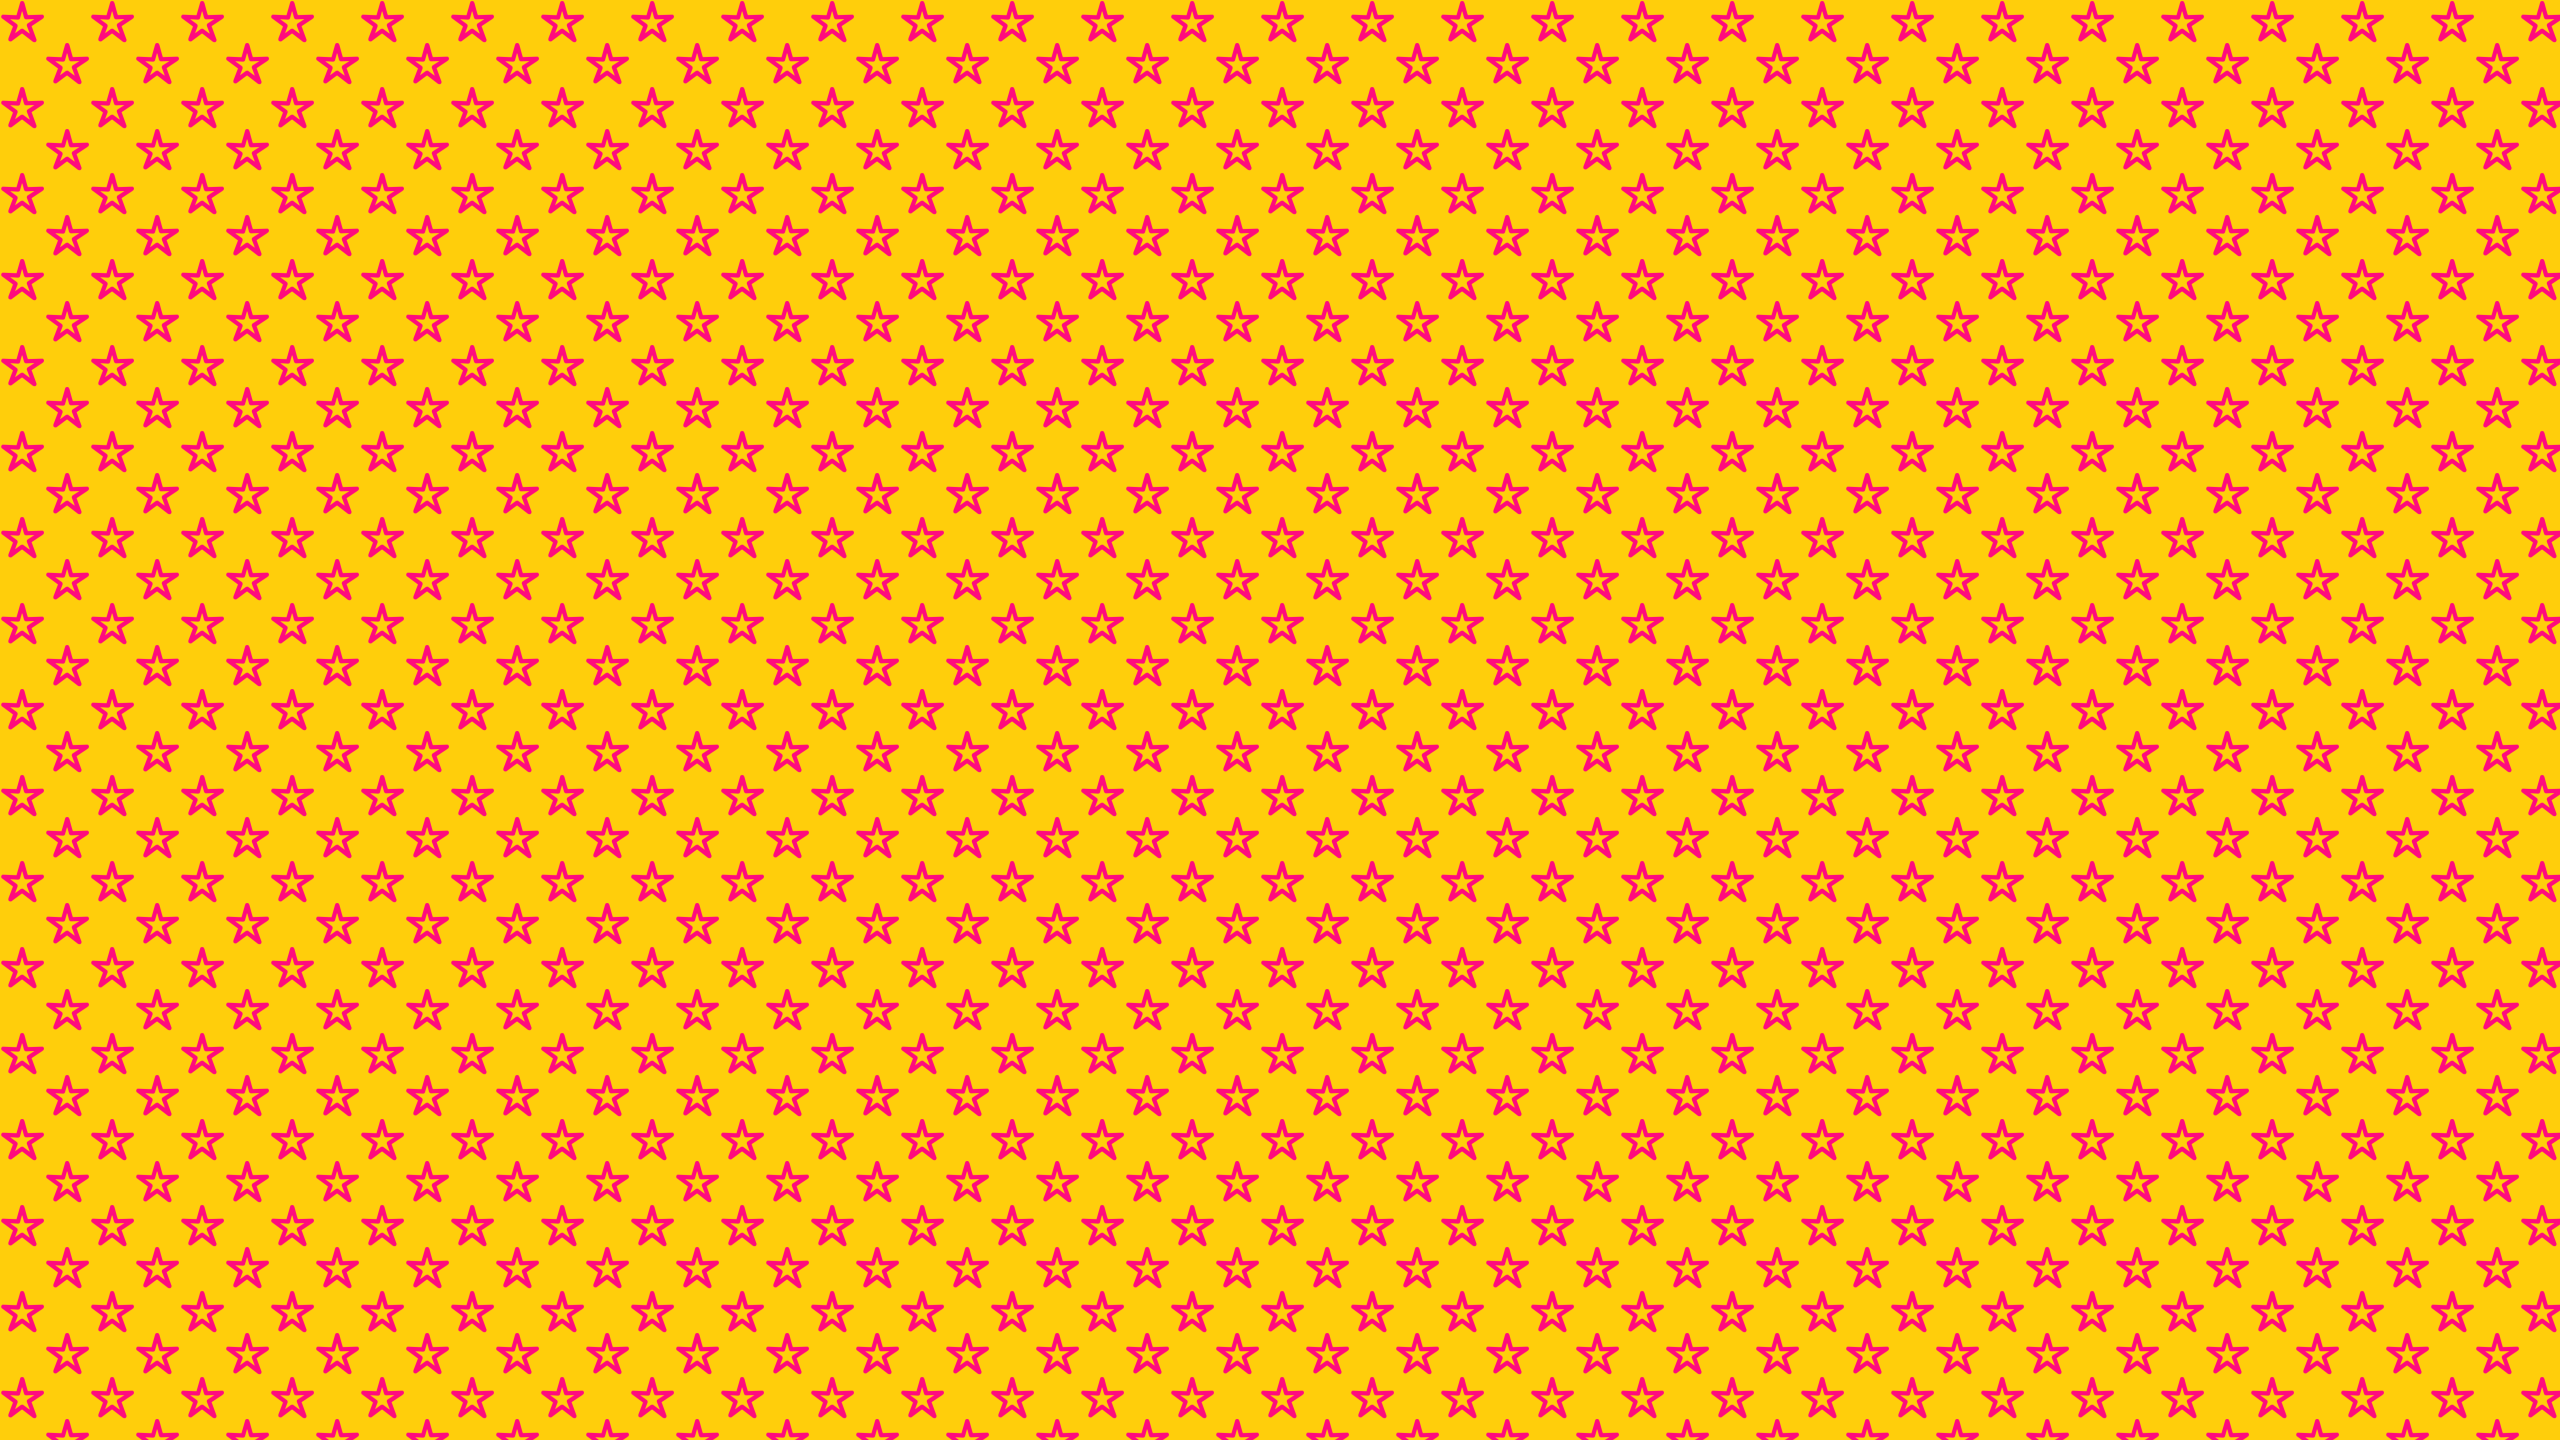 Yellow Pink Stars Desktop Wallpaper is easy. Just save